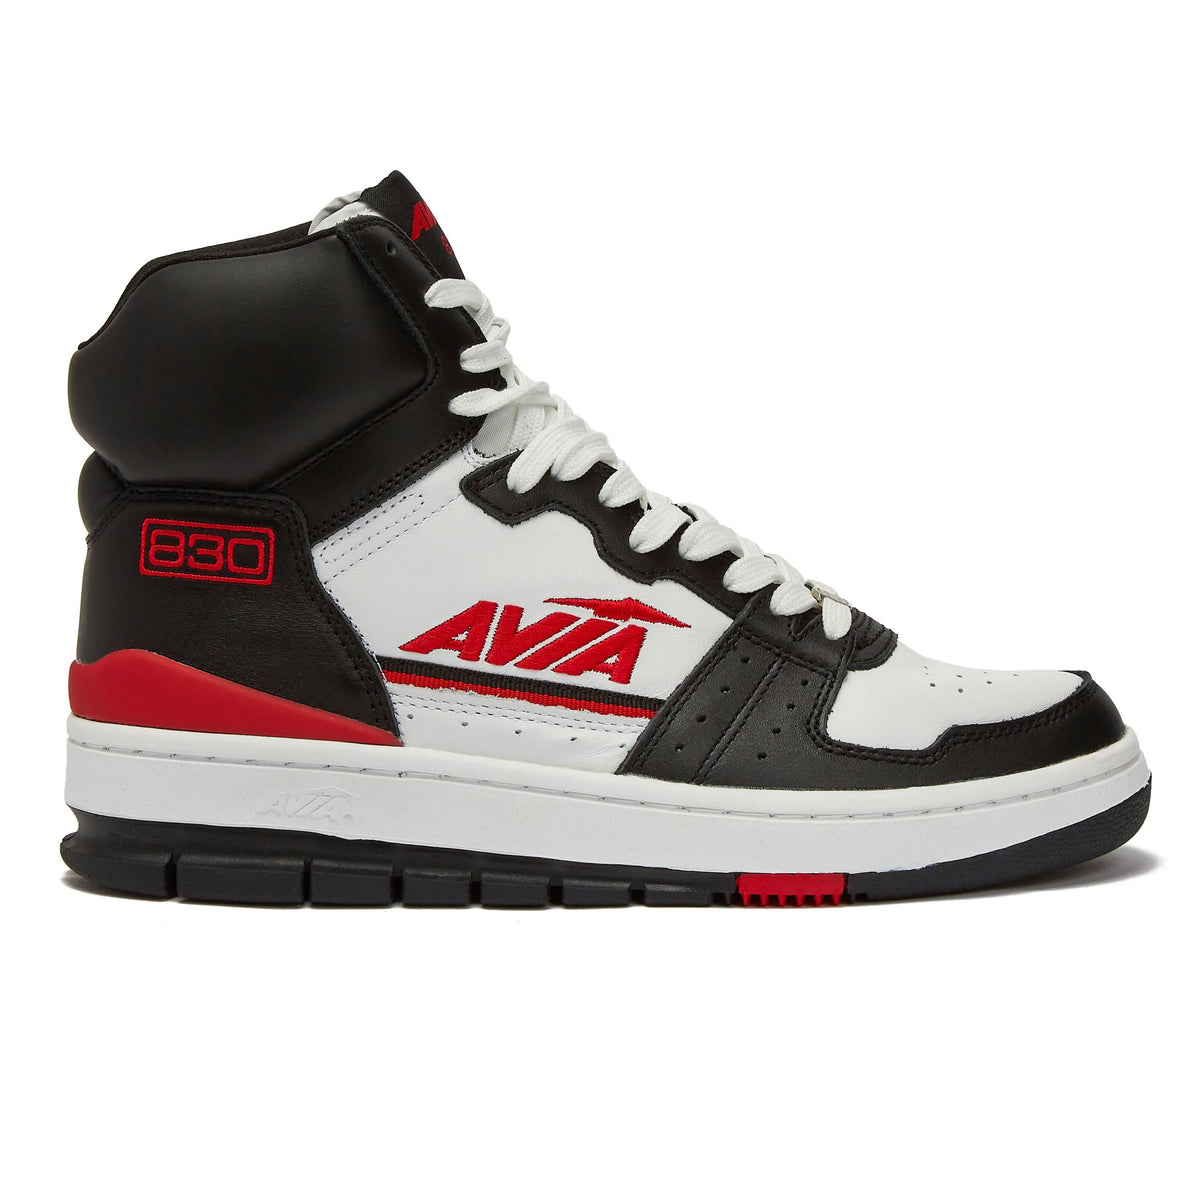 Avia Men's Avi-Retro 830 Black/Red/White Basketball Sneakers – That Shoe  Store and More